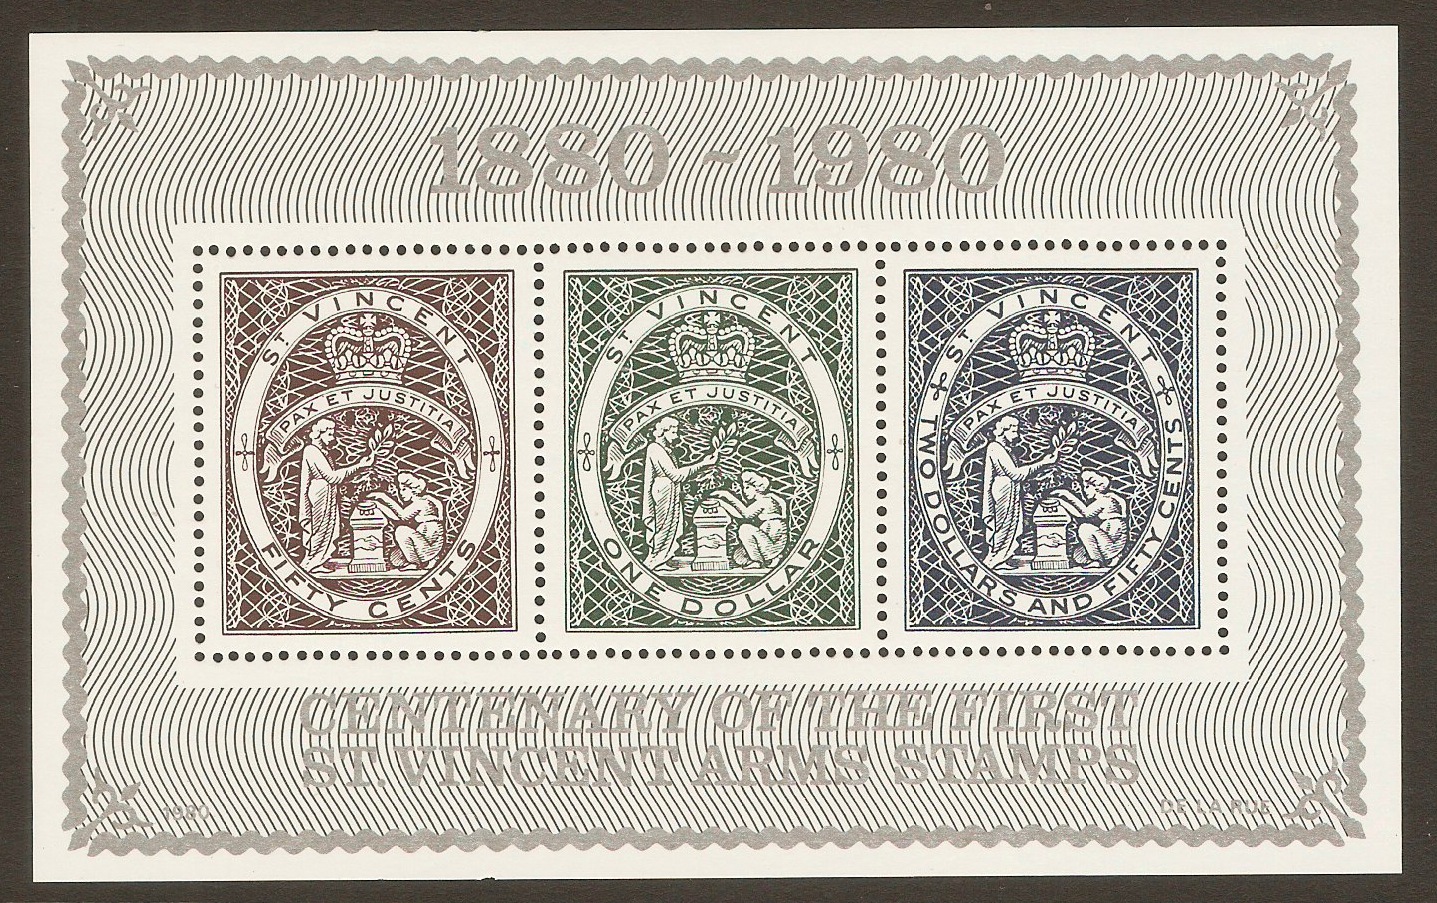 St Vincent 1979 Arms Stamps Centenary sheet. SGMS633.